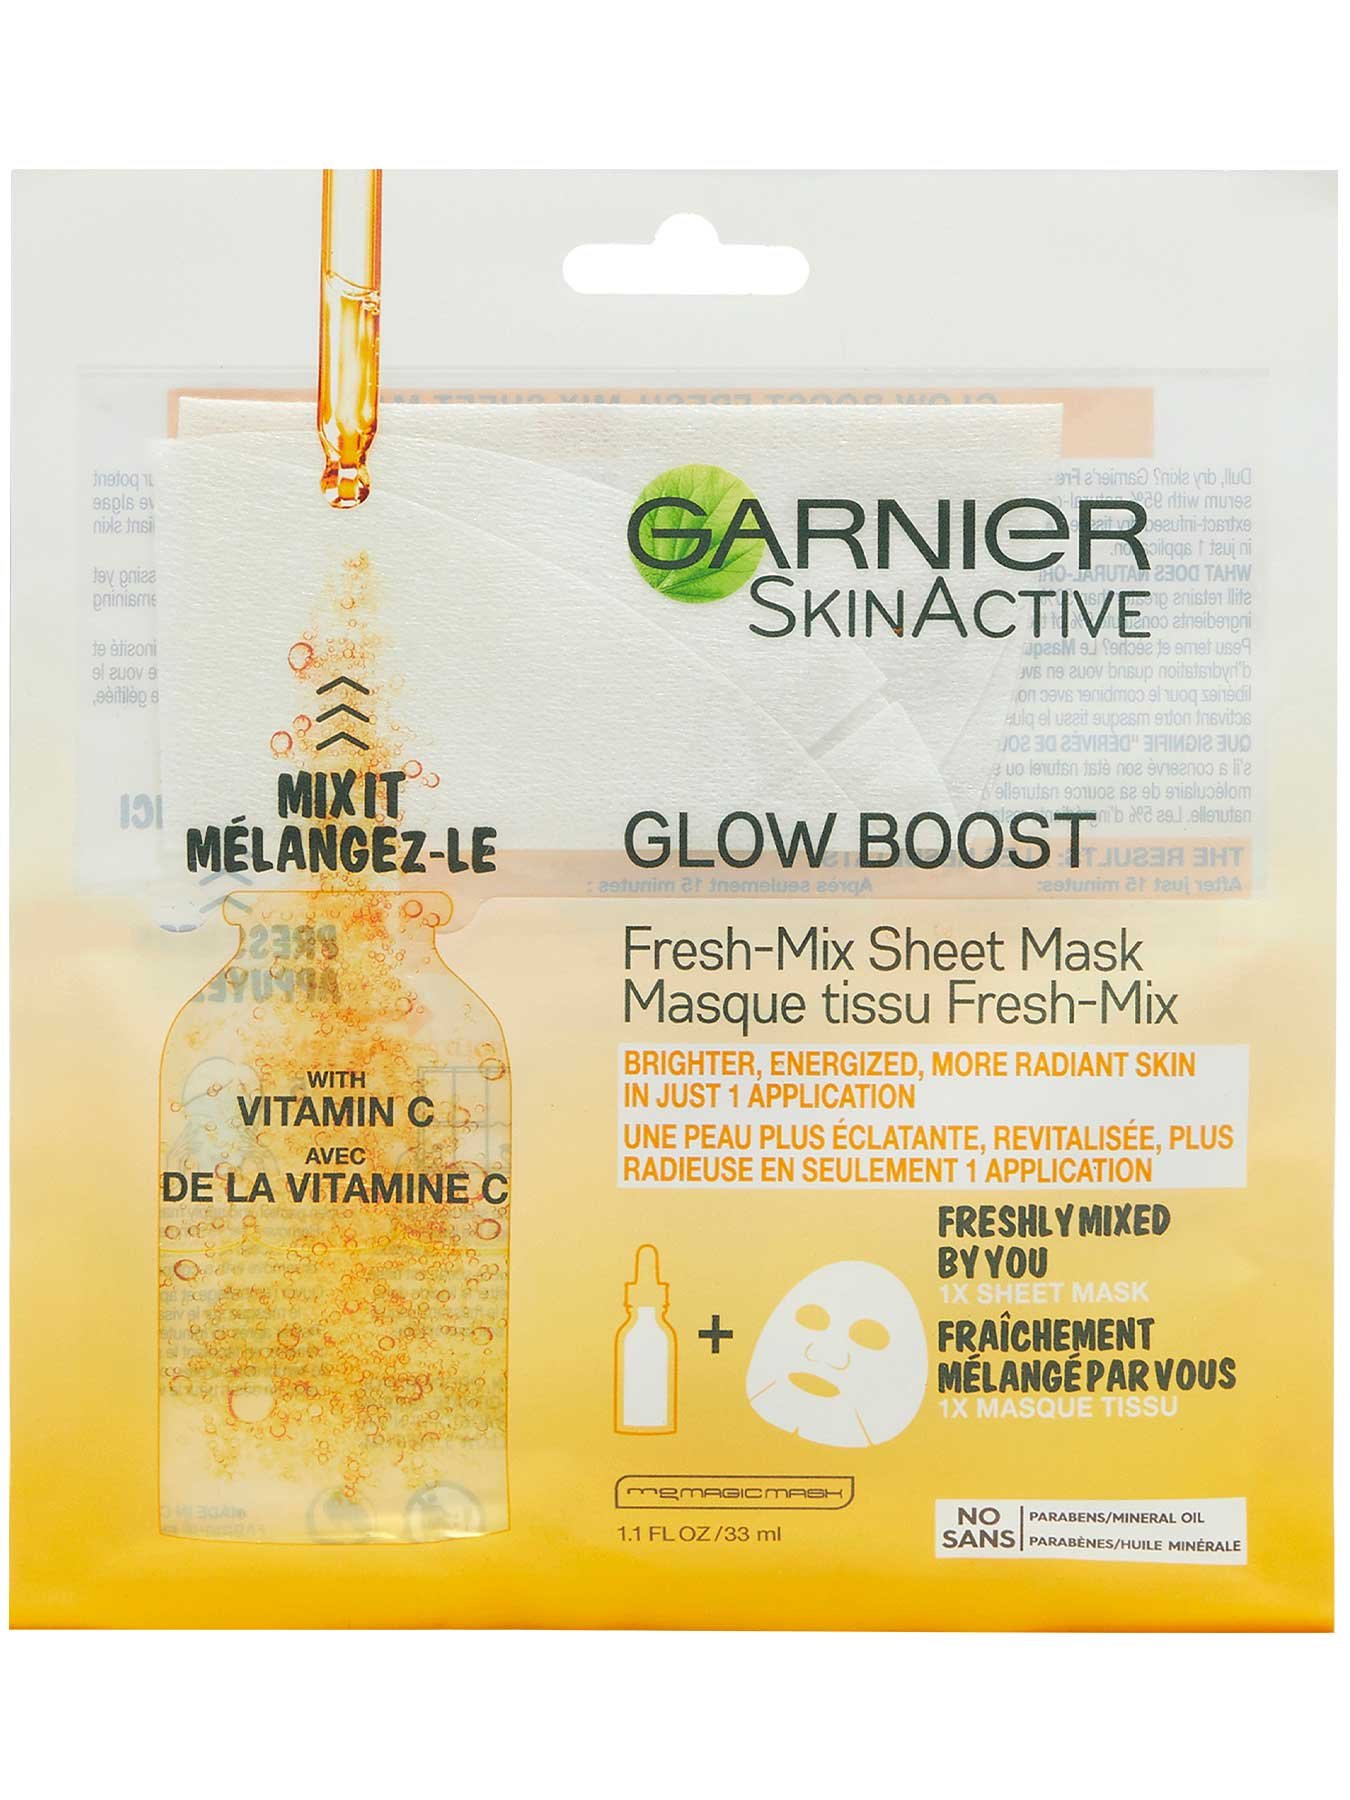 Garnier SkinActive Glow Boost Sheet Mask front Image